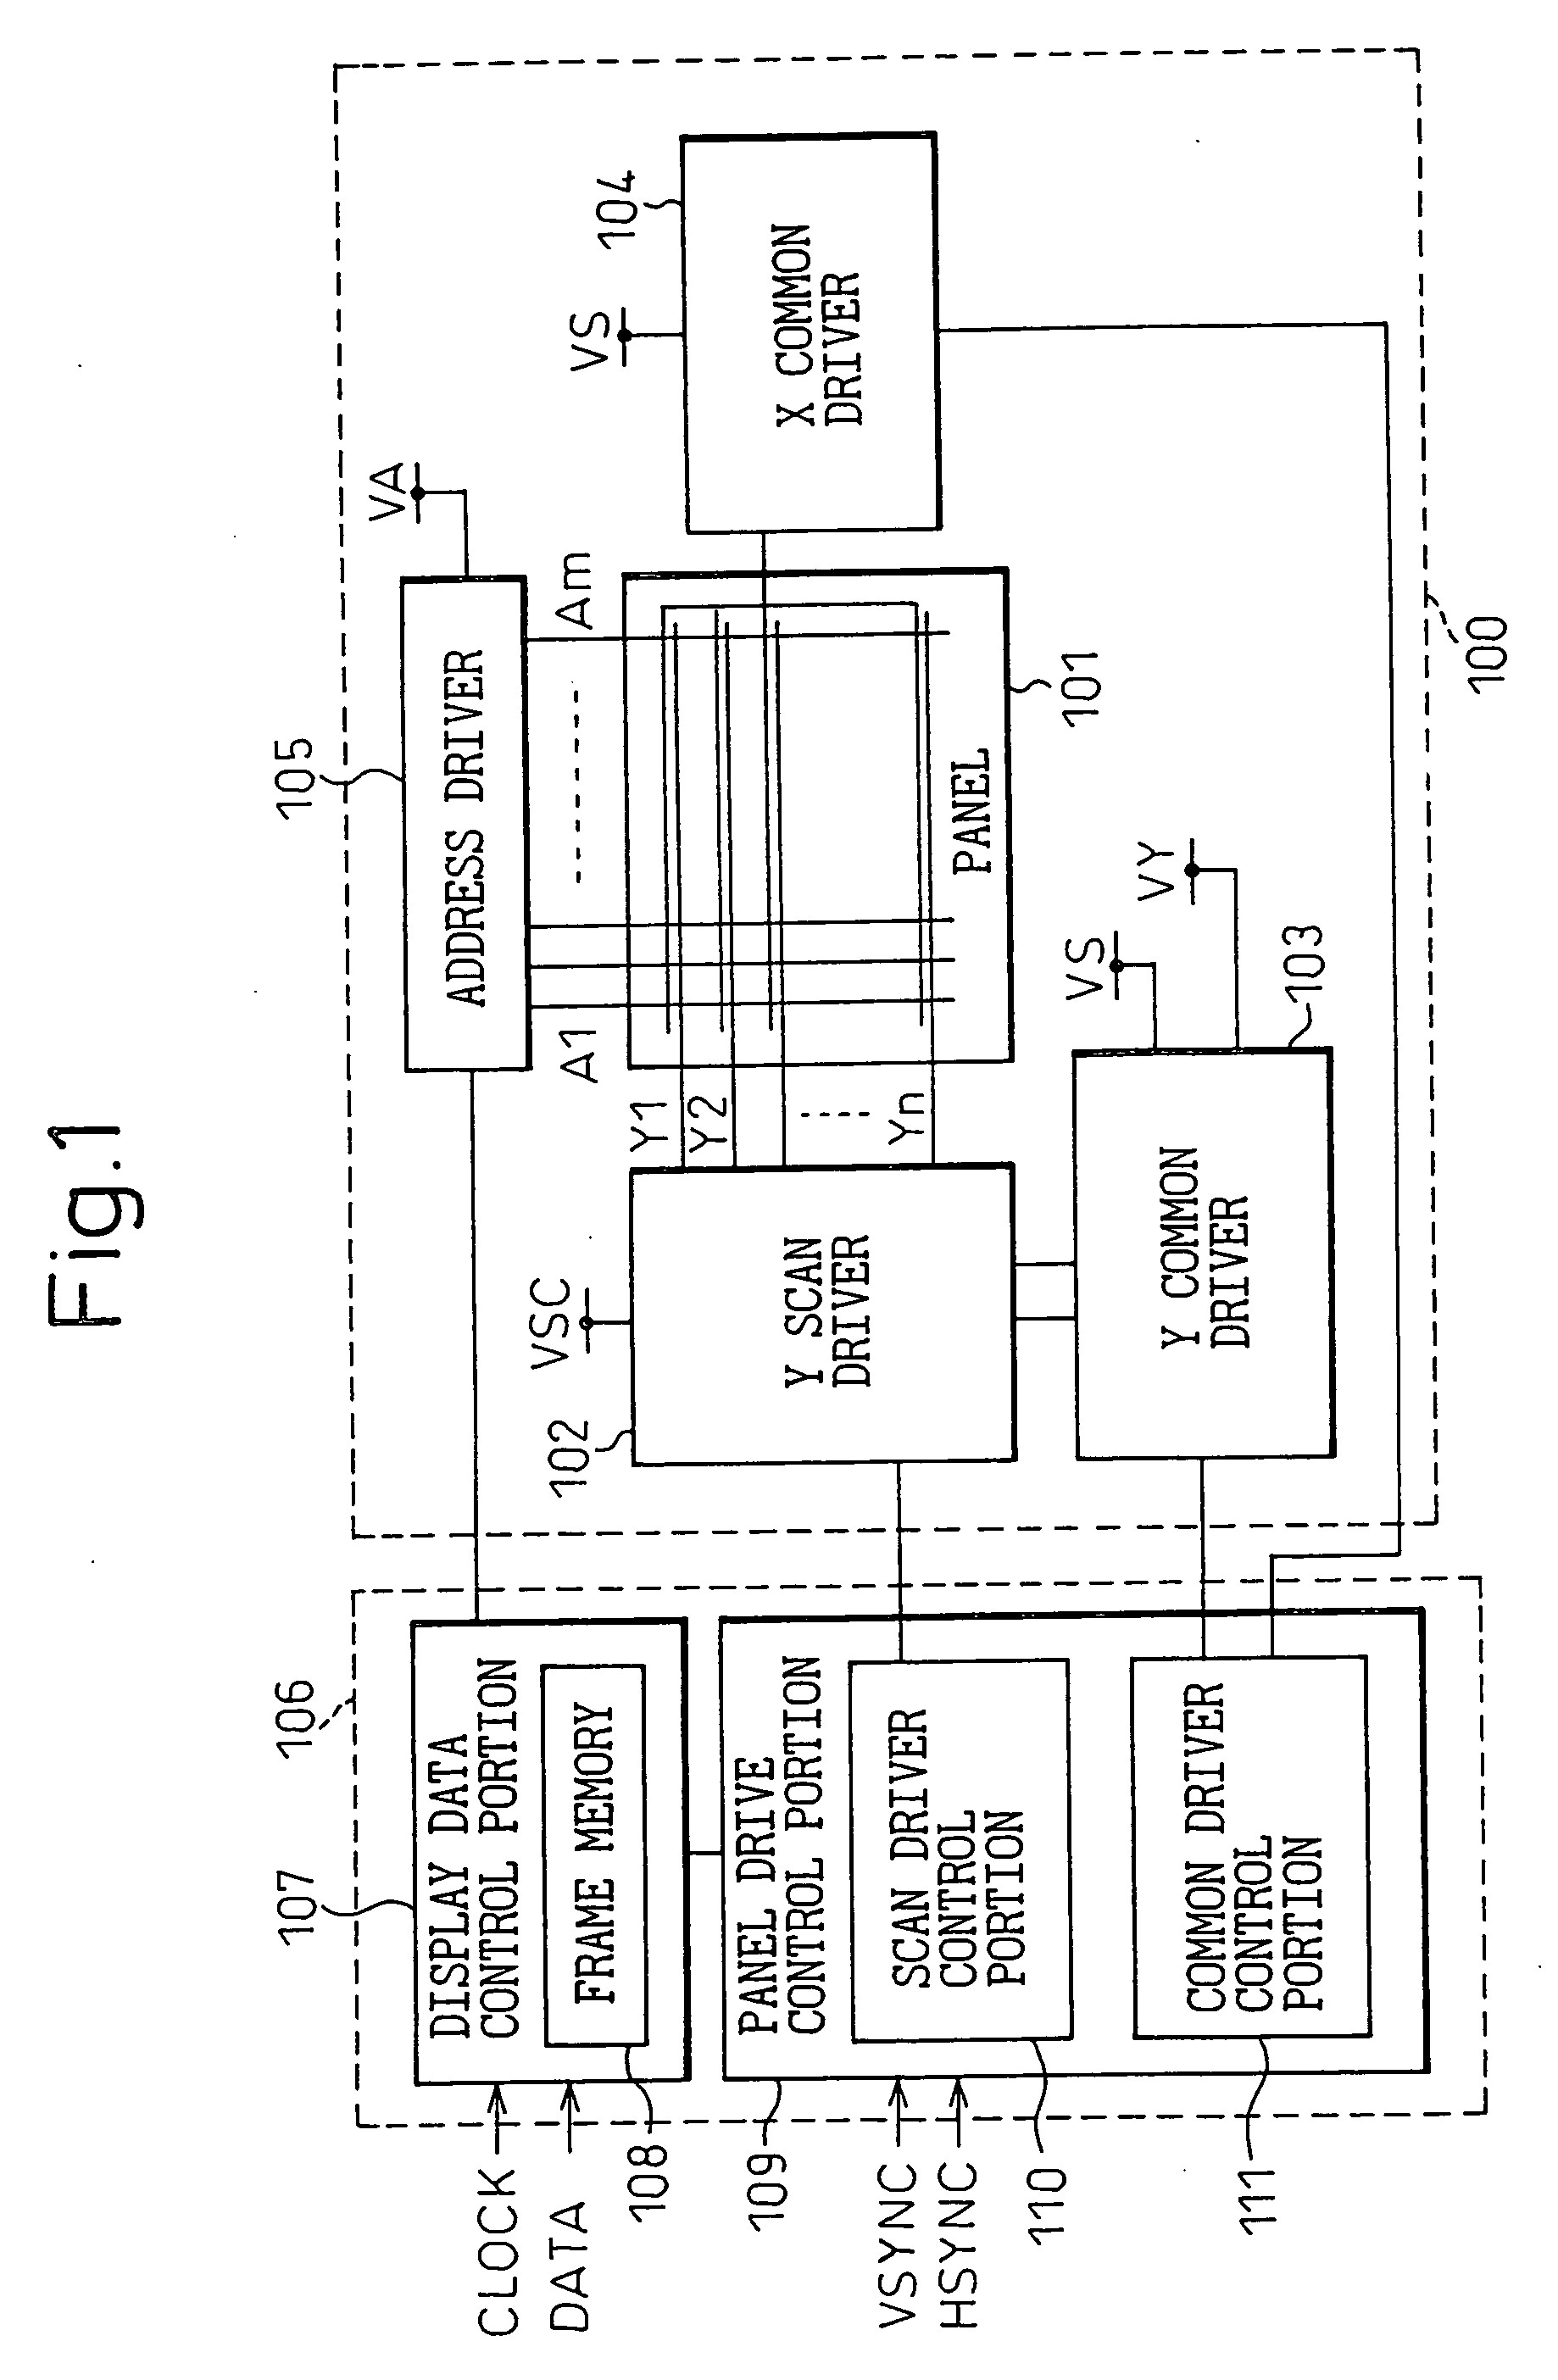 Method of driving display apparatus and plasma display apparatus